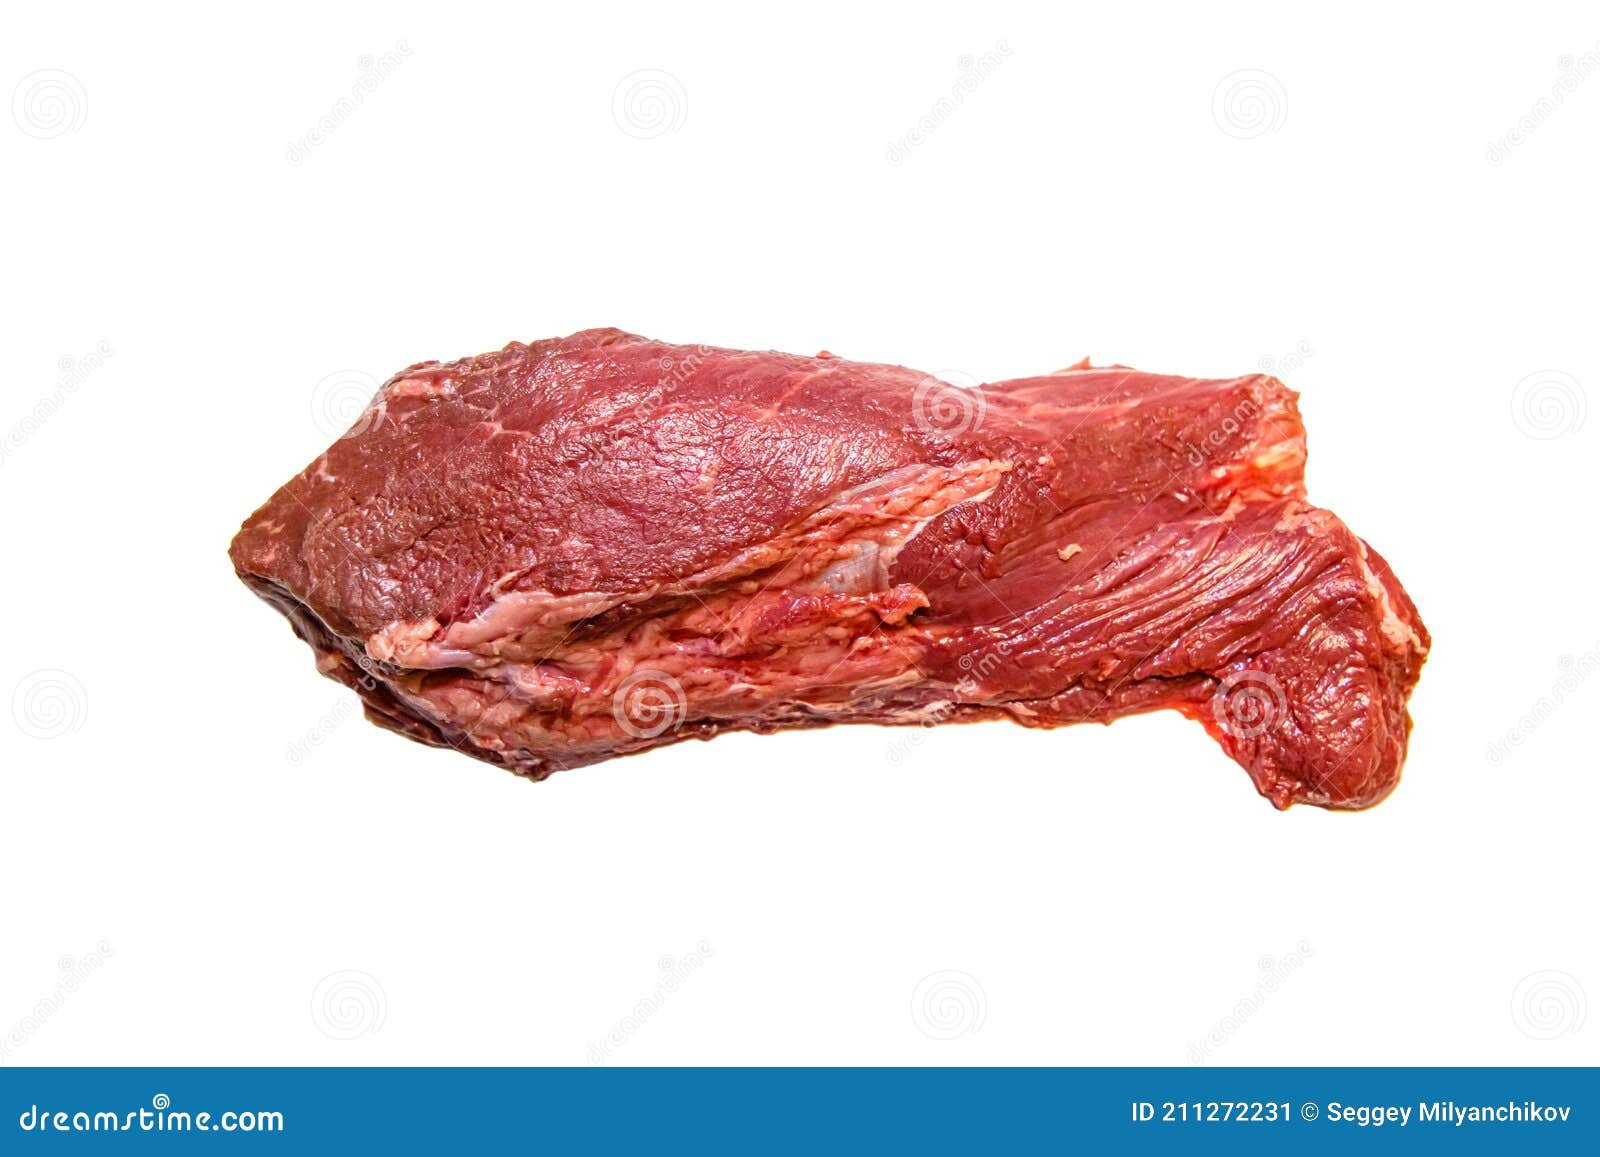 steak flanchet flan steak of raw marbled beef lies on a white background. 